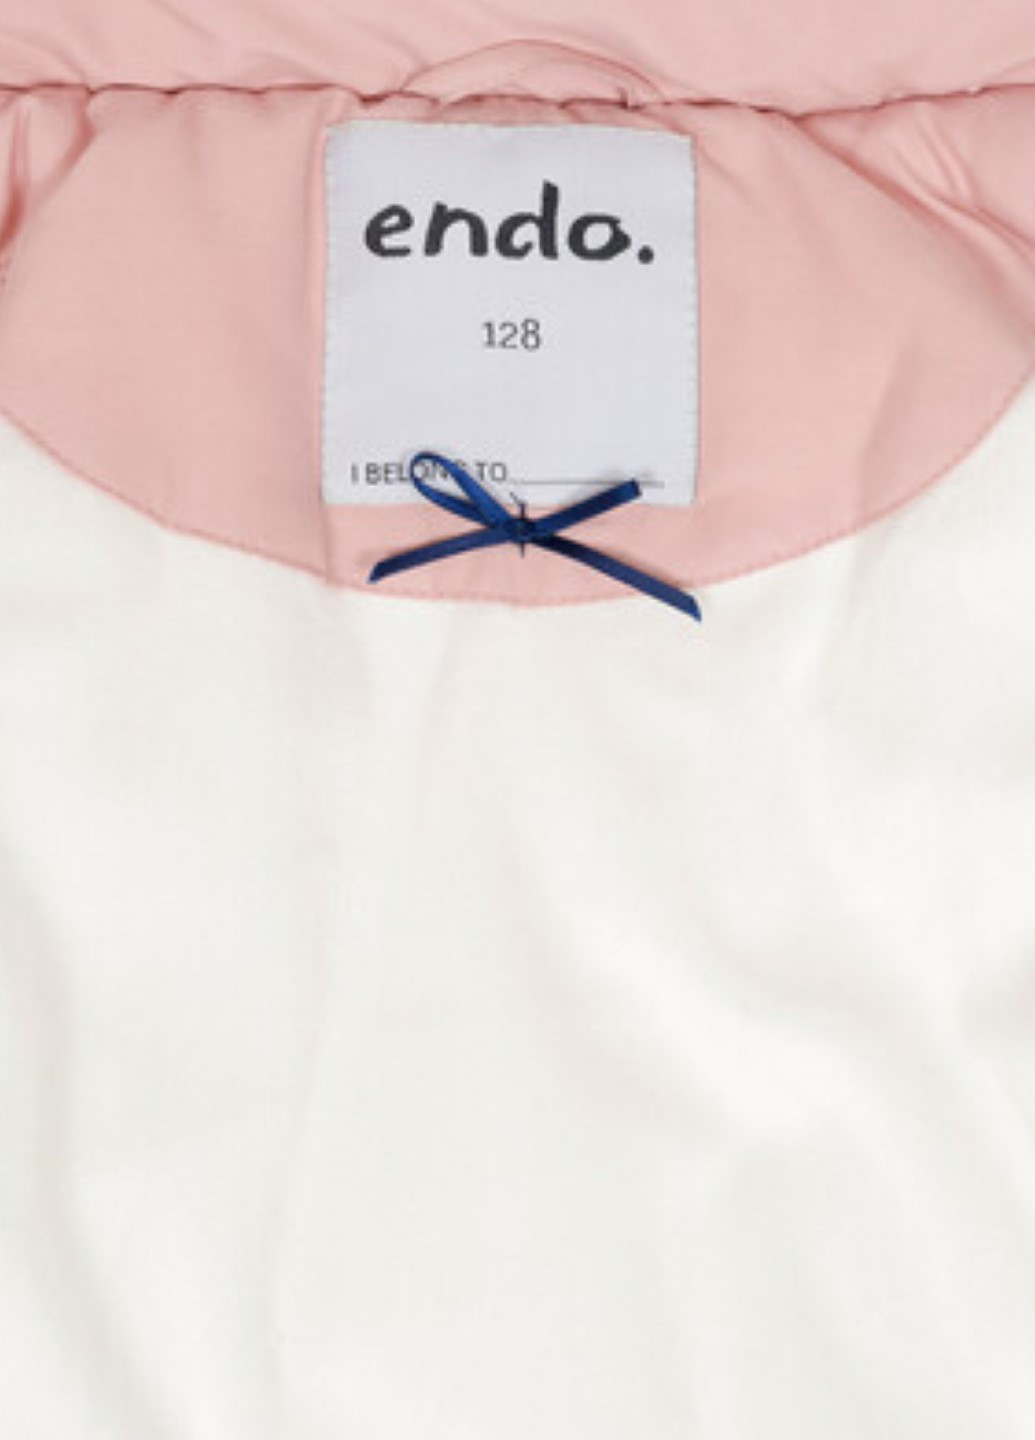 Рожева демісезонна курточка Endo